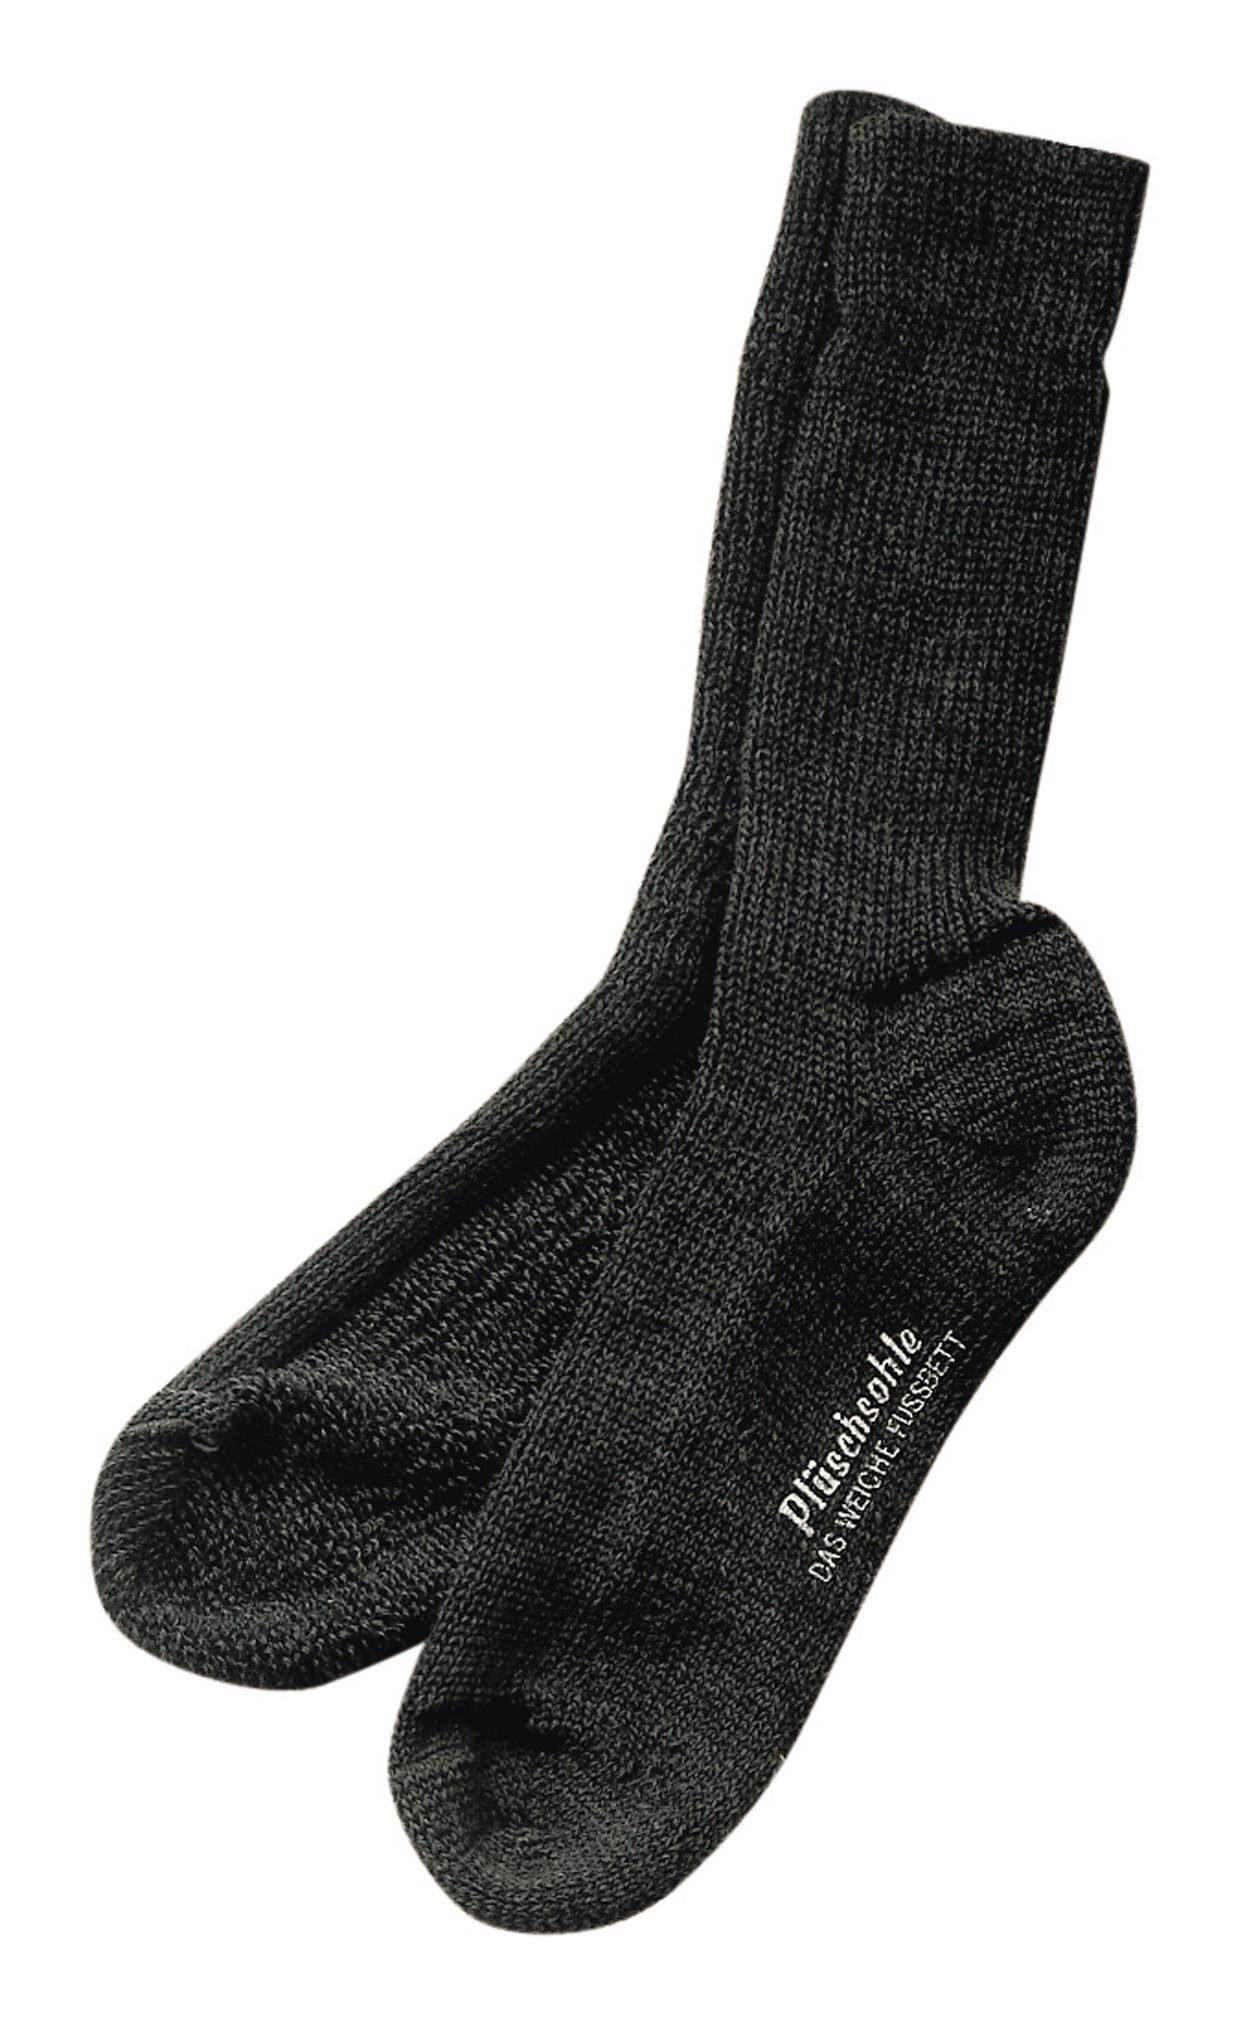 fortis Socken Gesundheitssocke Größe 41 - 42 anthrazit | Socken